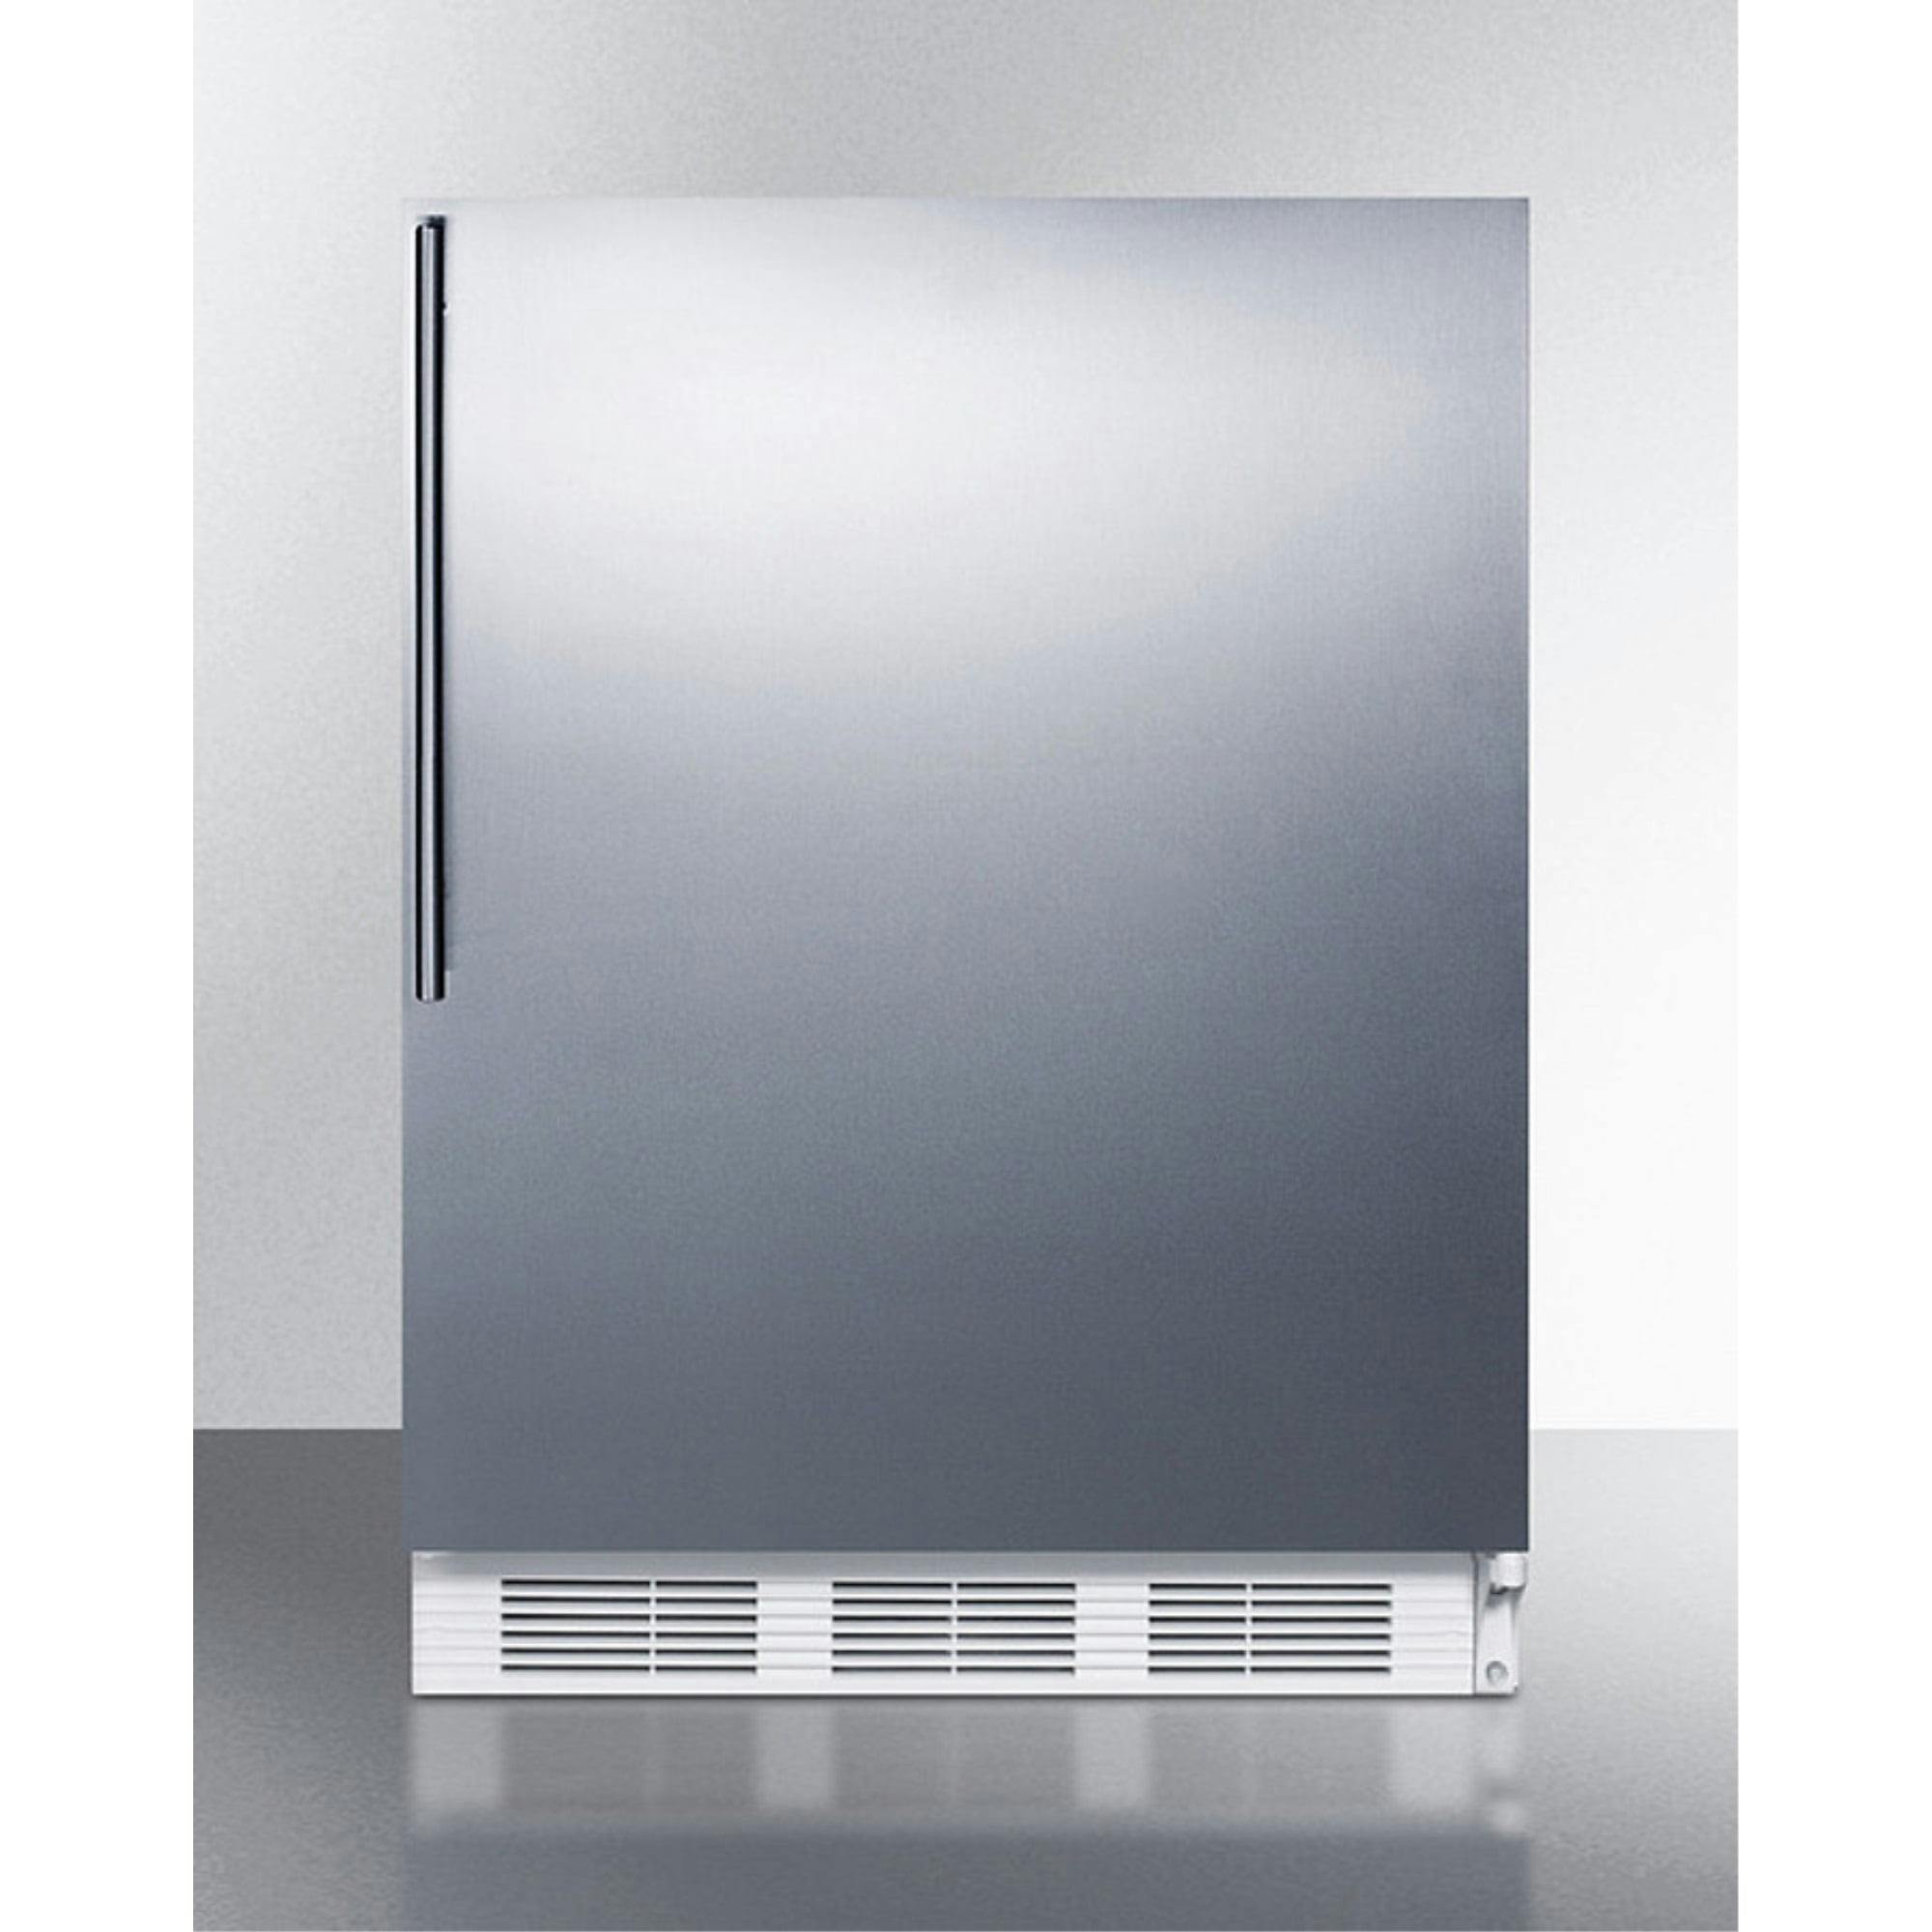 Sleek Stainless Steel 24" Compact Undercounter All-Refrigerator